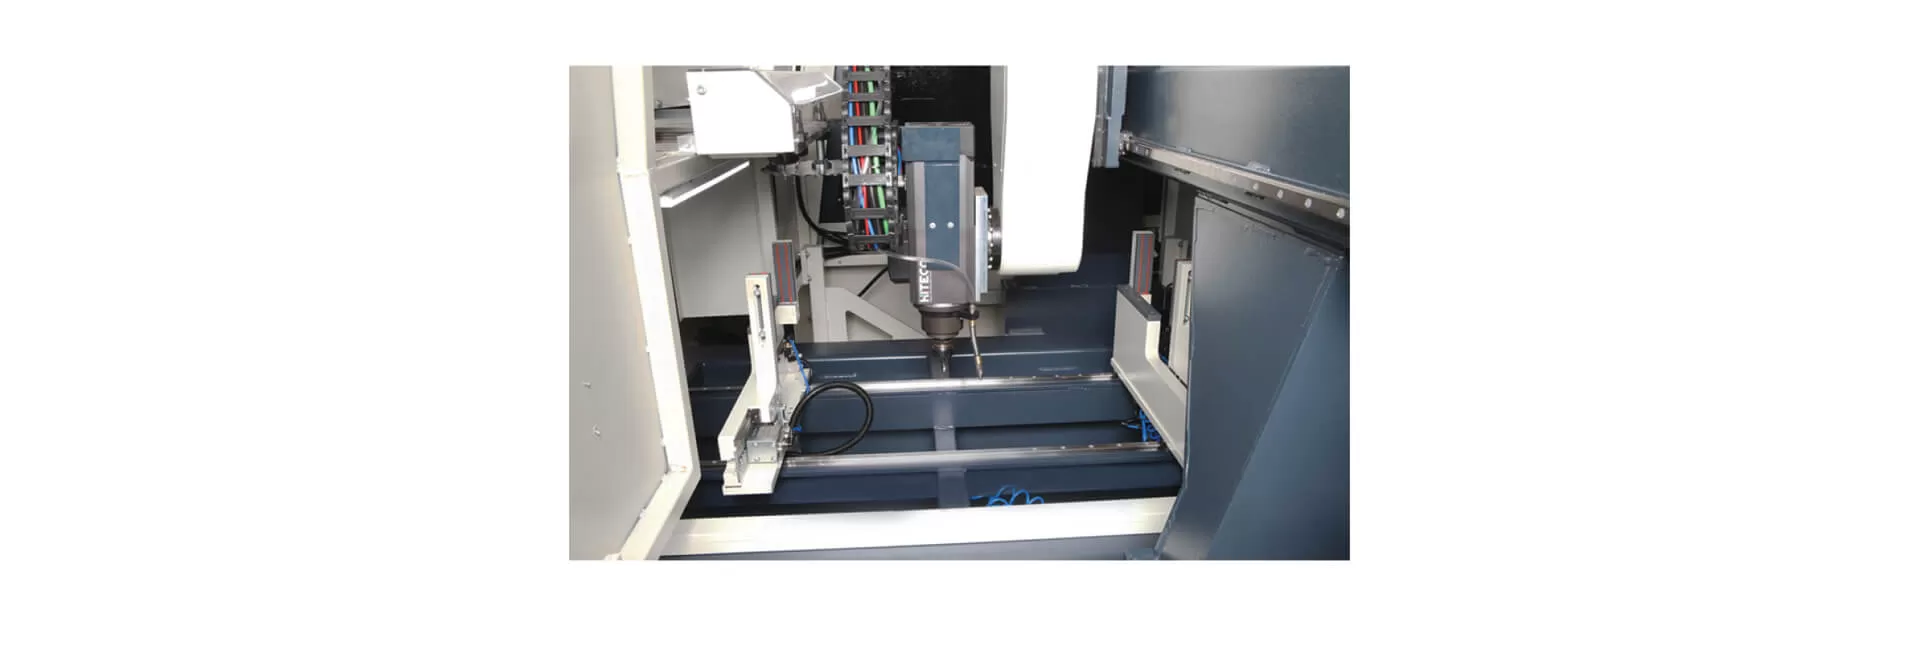 INO XP 8000 4-Achsen-CNC-Profilbearbeitungszentrum